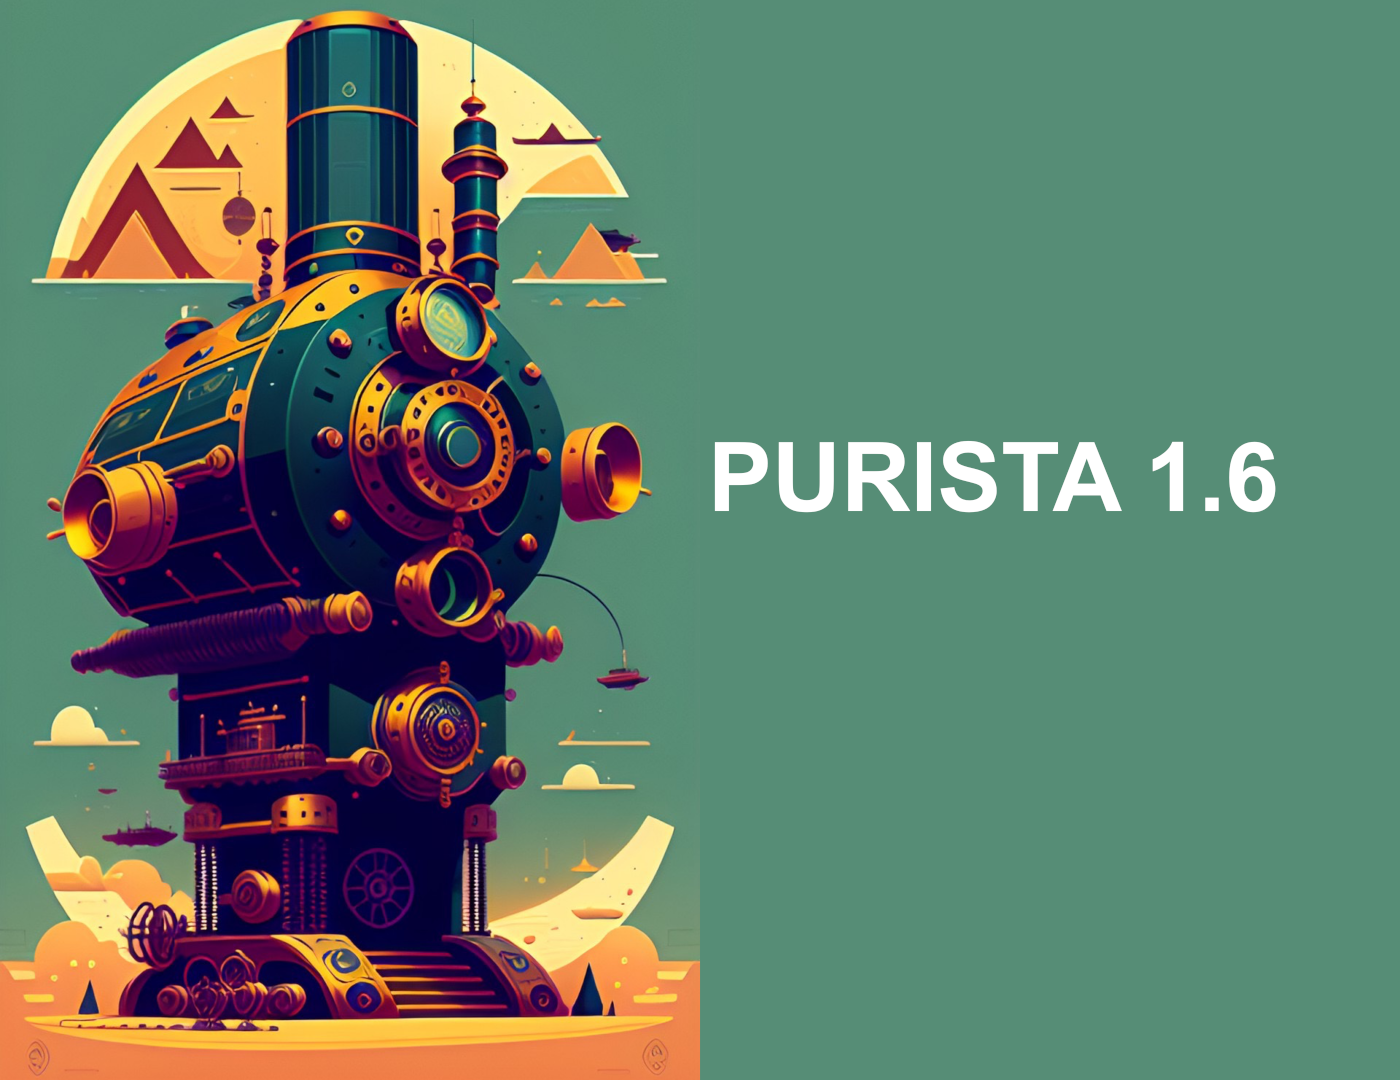 PURISTA version 1.6 - Dapr, MQTT and more